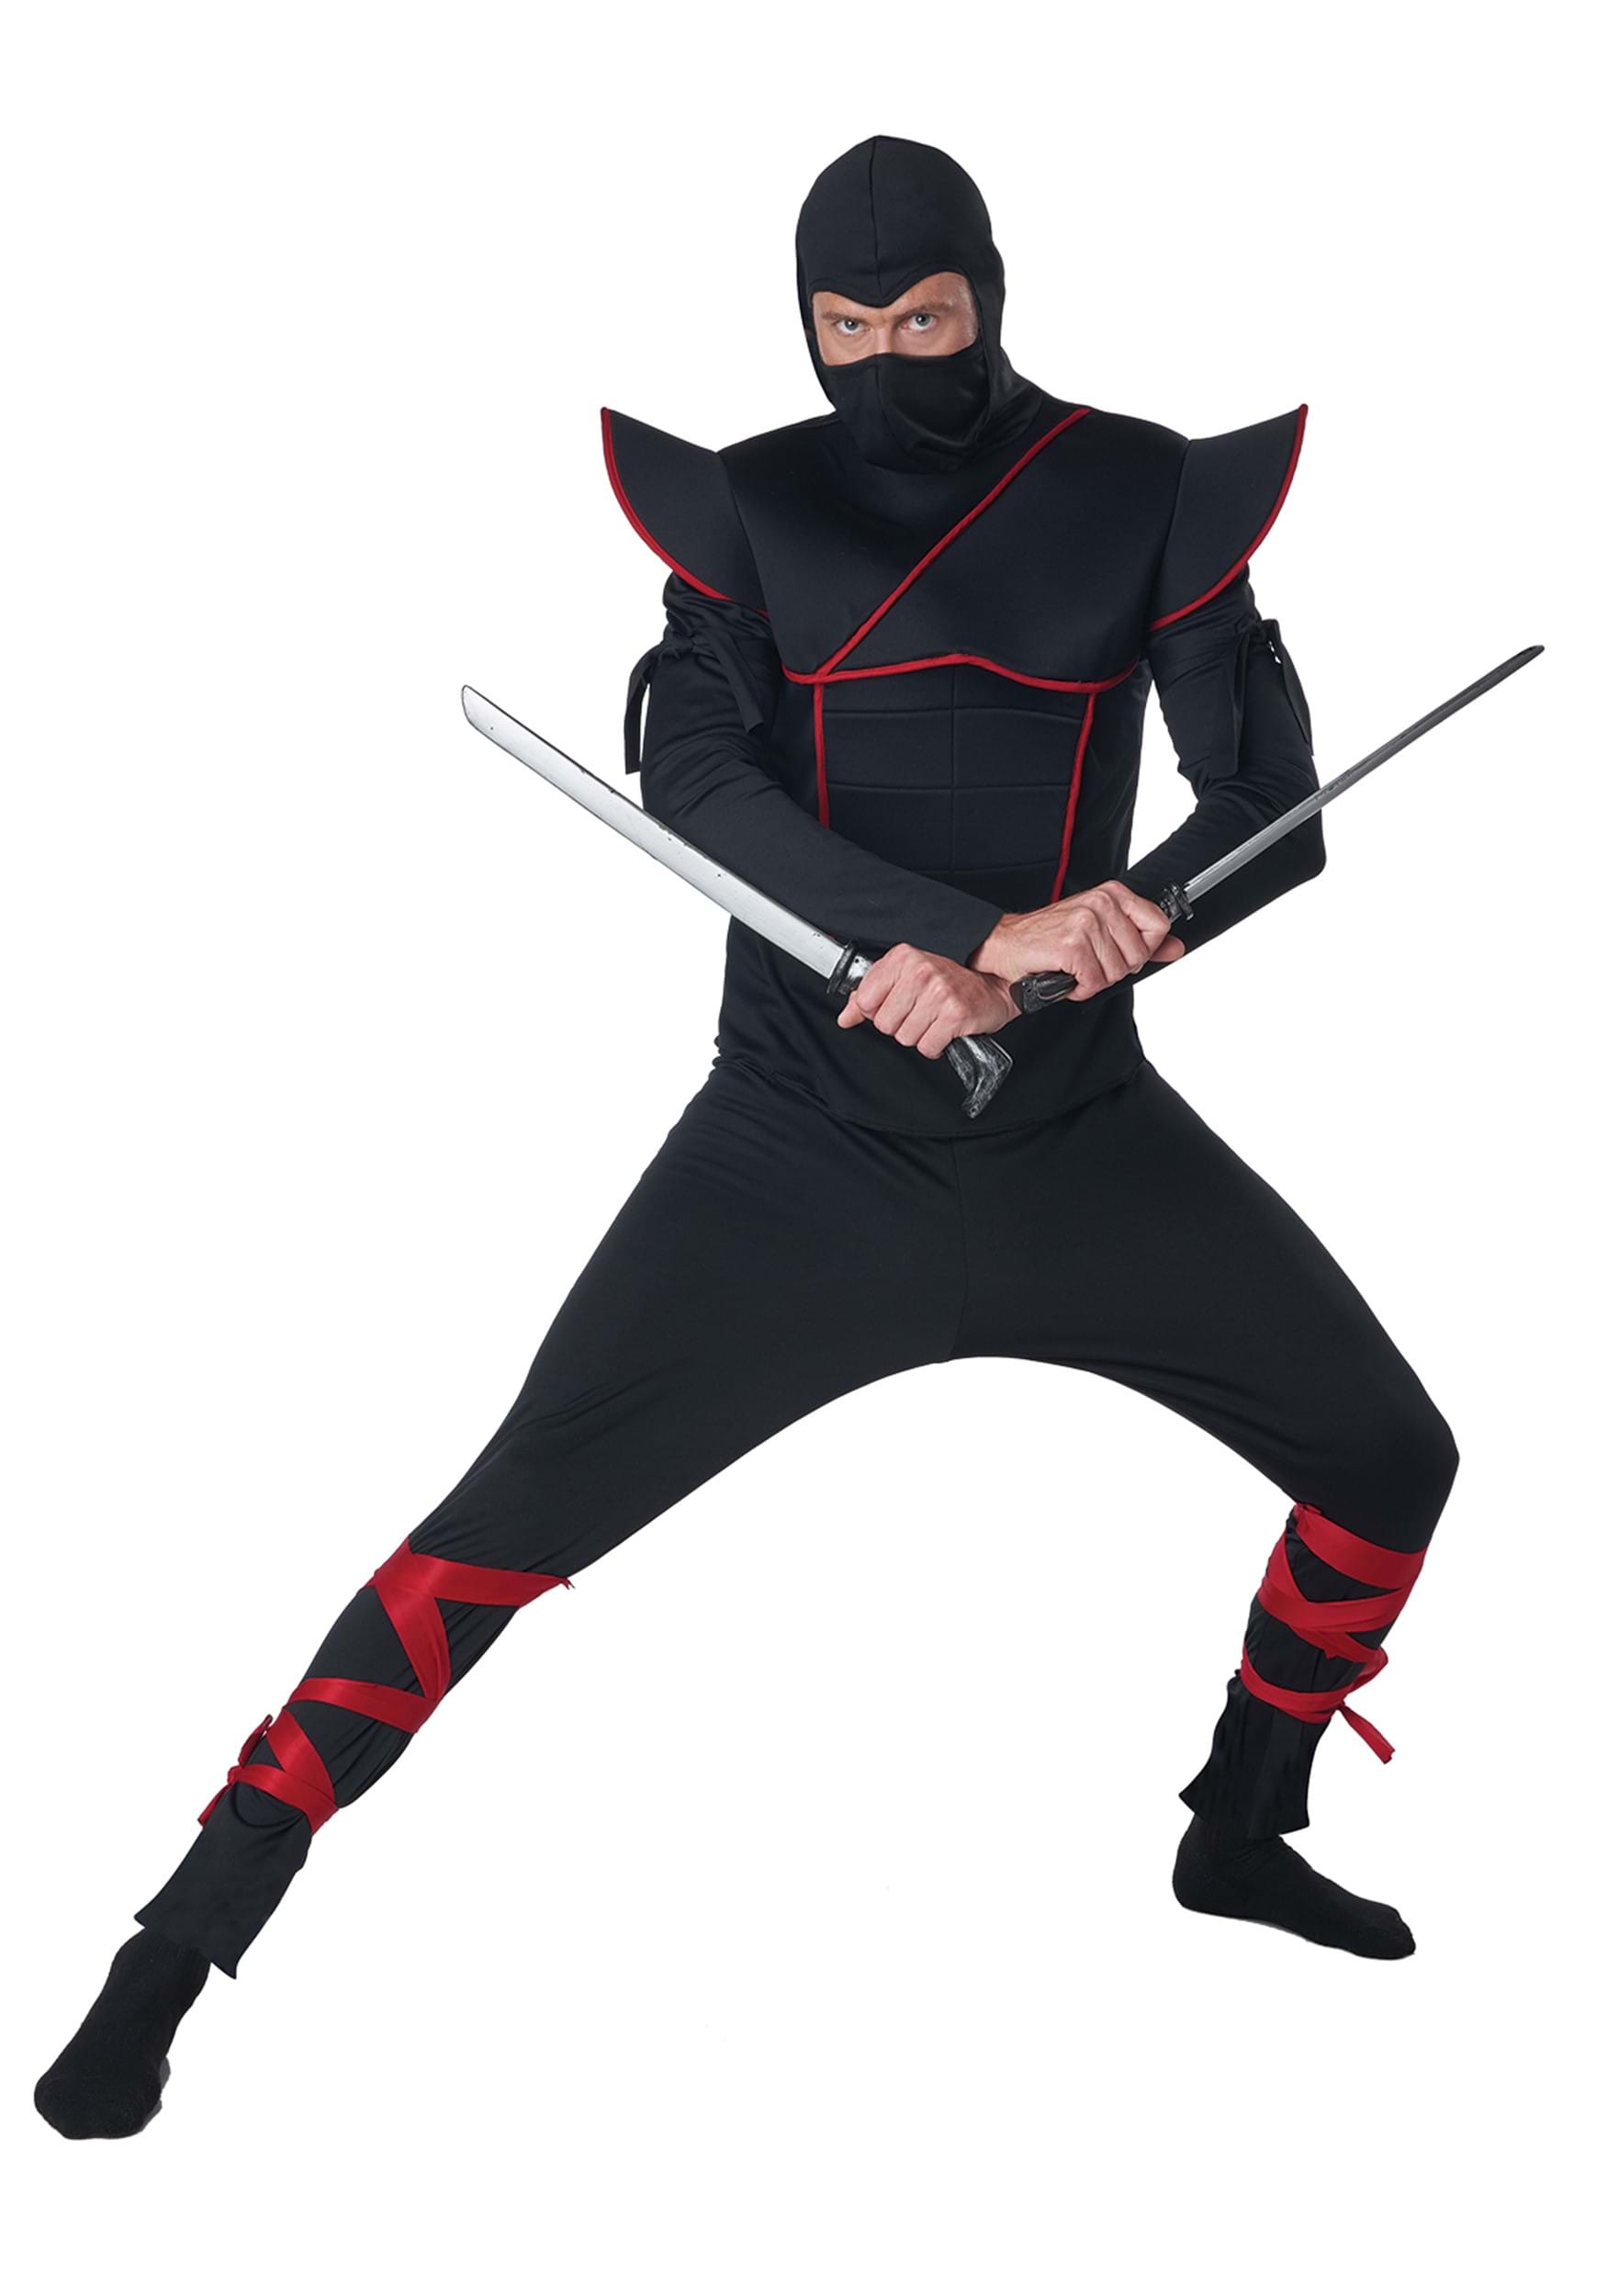 Spooktacular Kids Silver Ninja Costume with Foam Accessories L